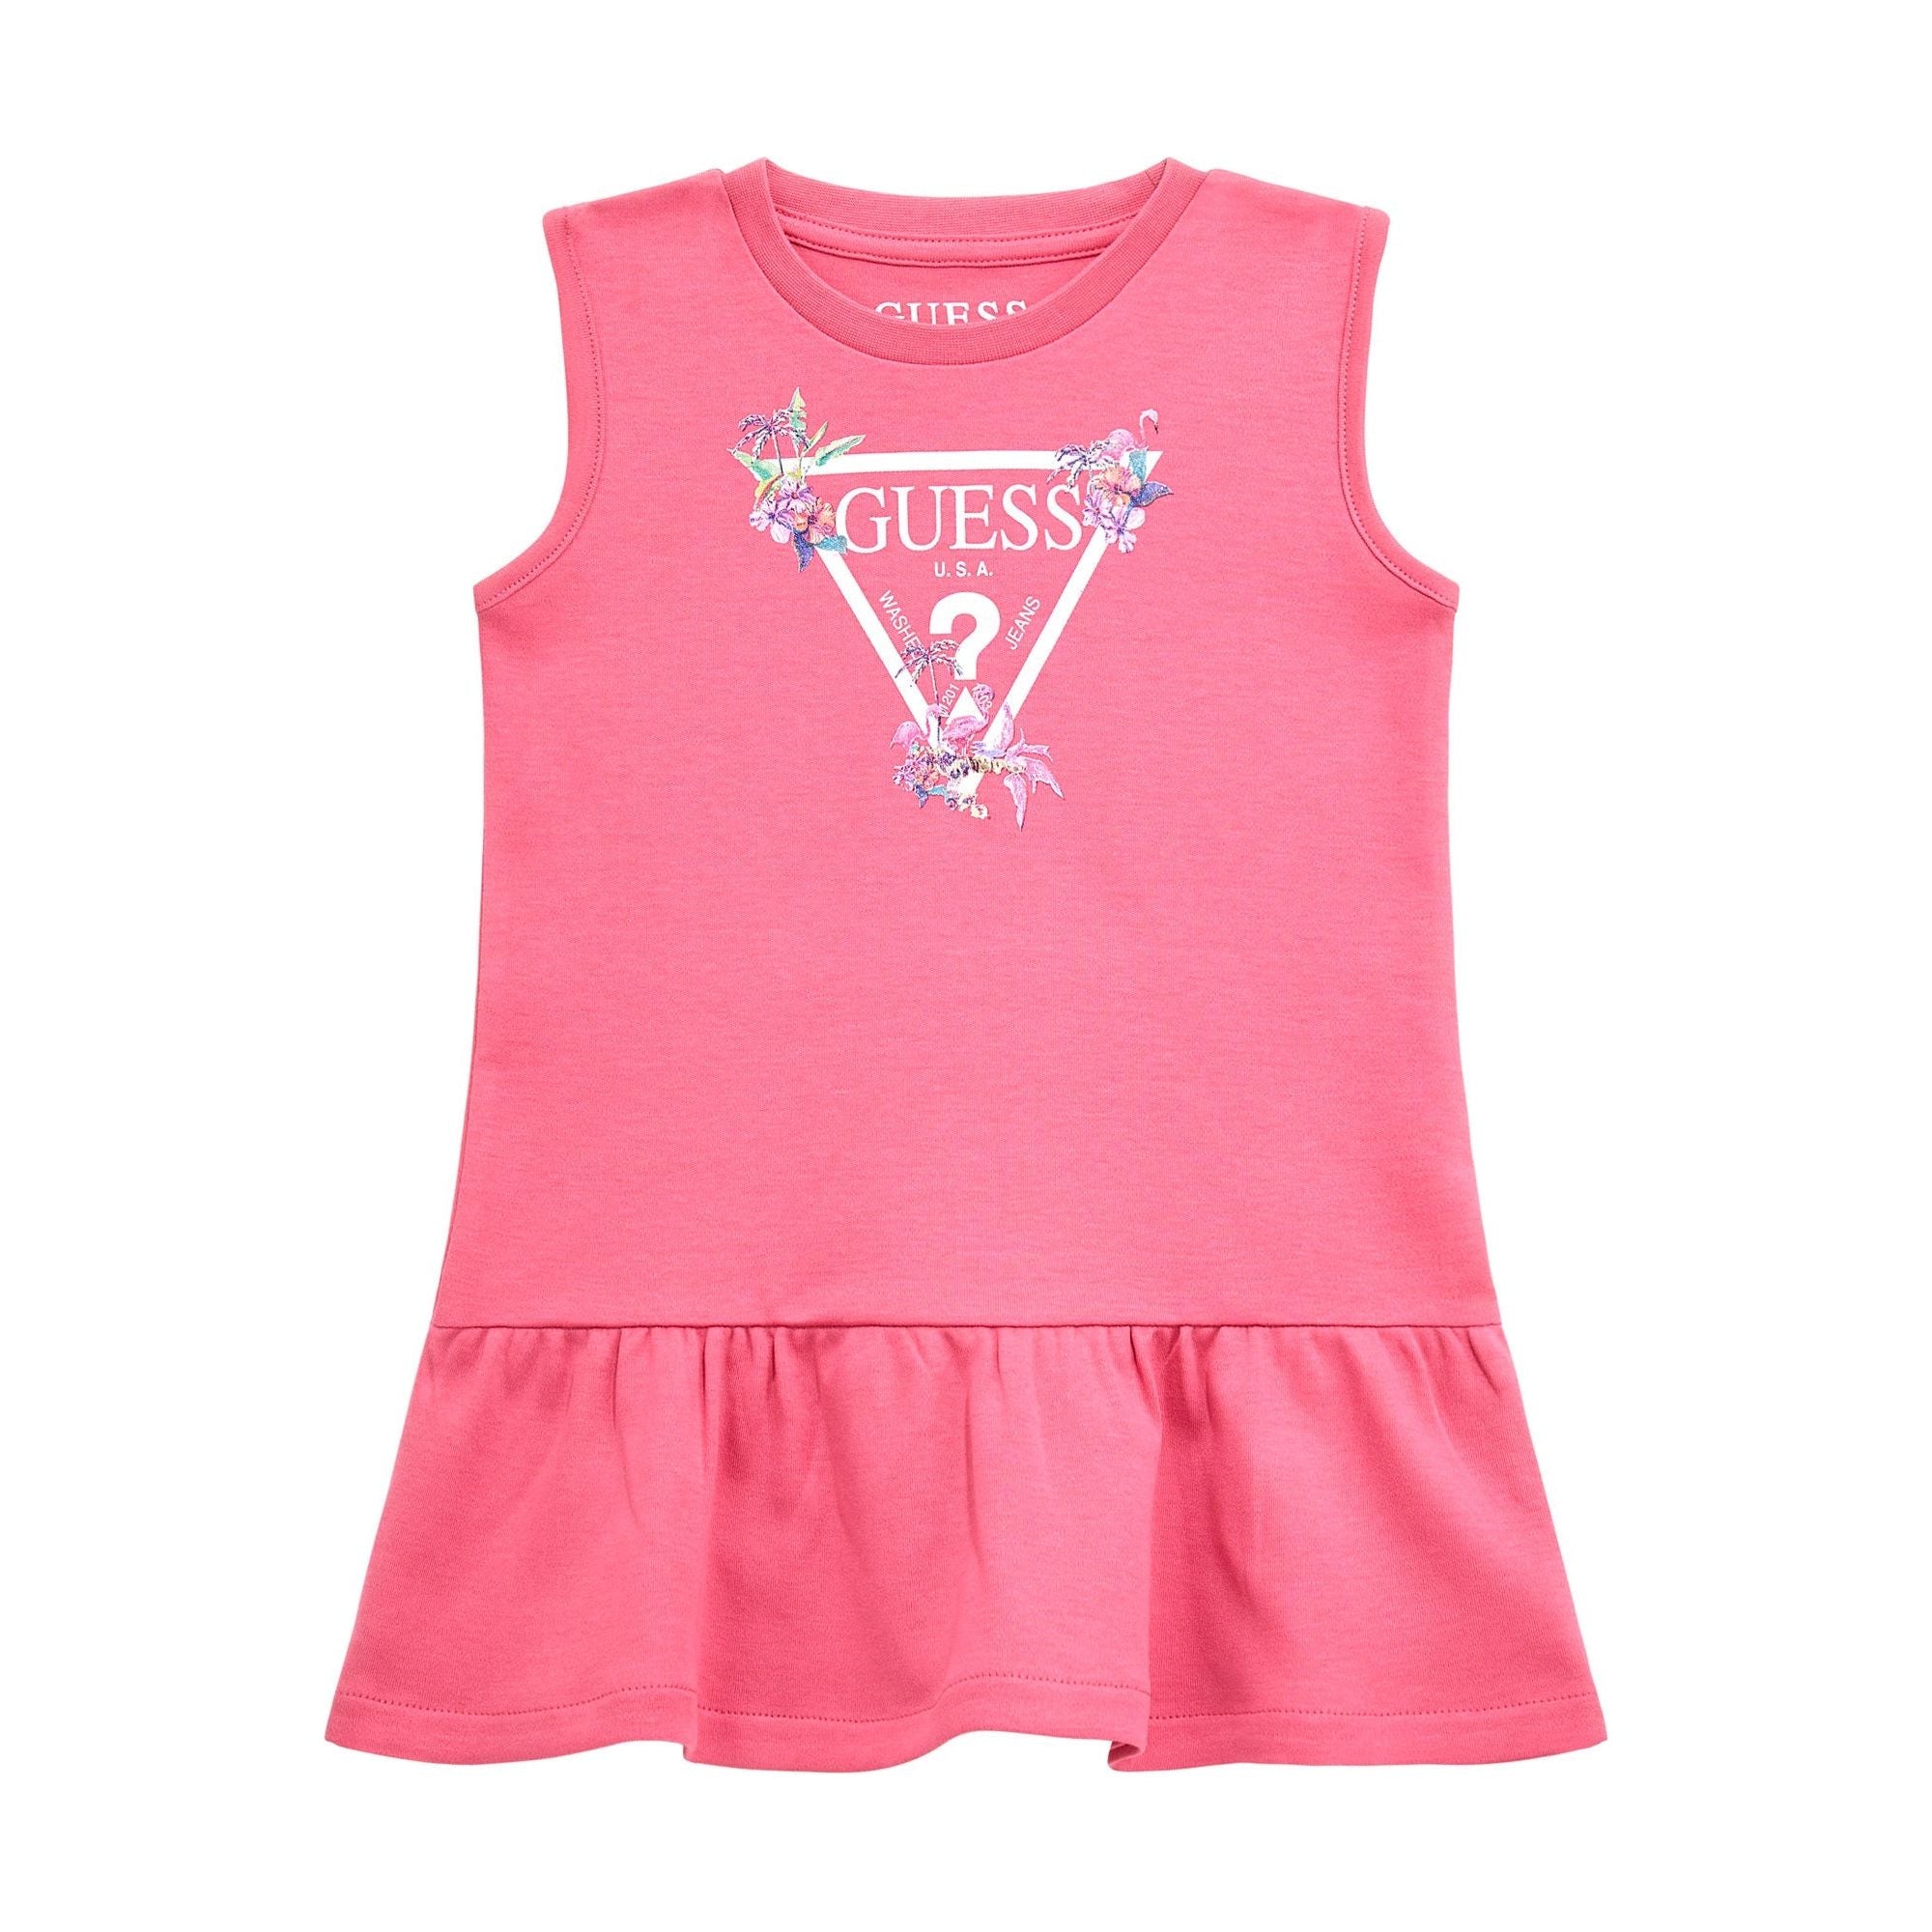 Guess - Toddler Girls Dress in Pink